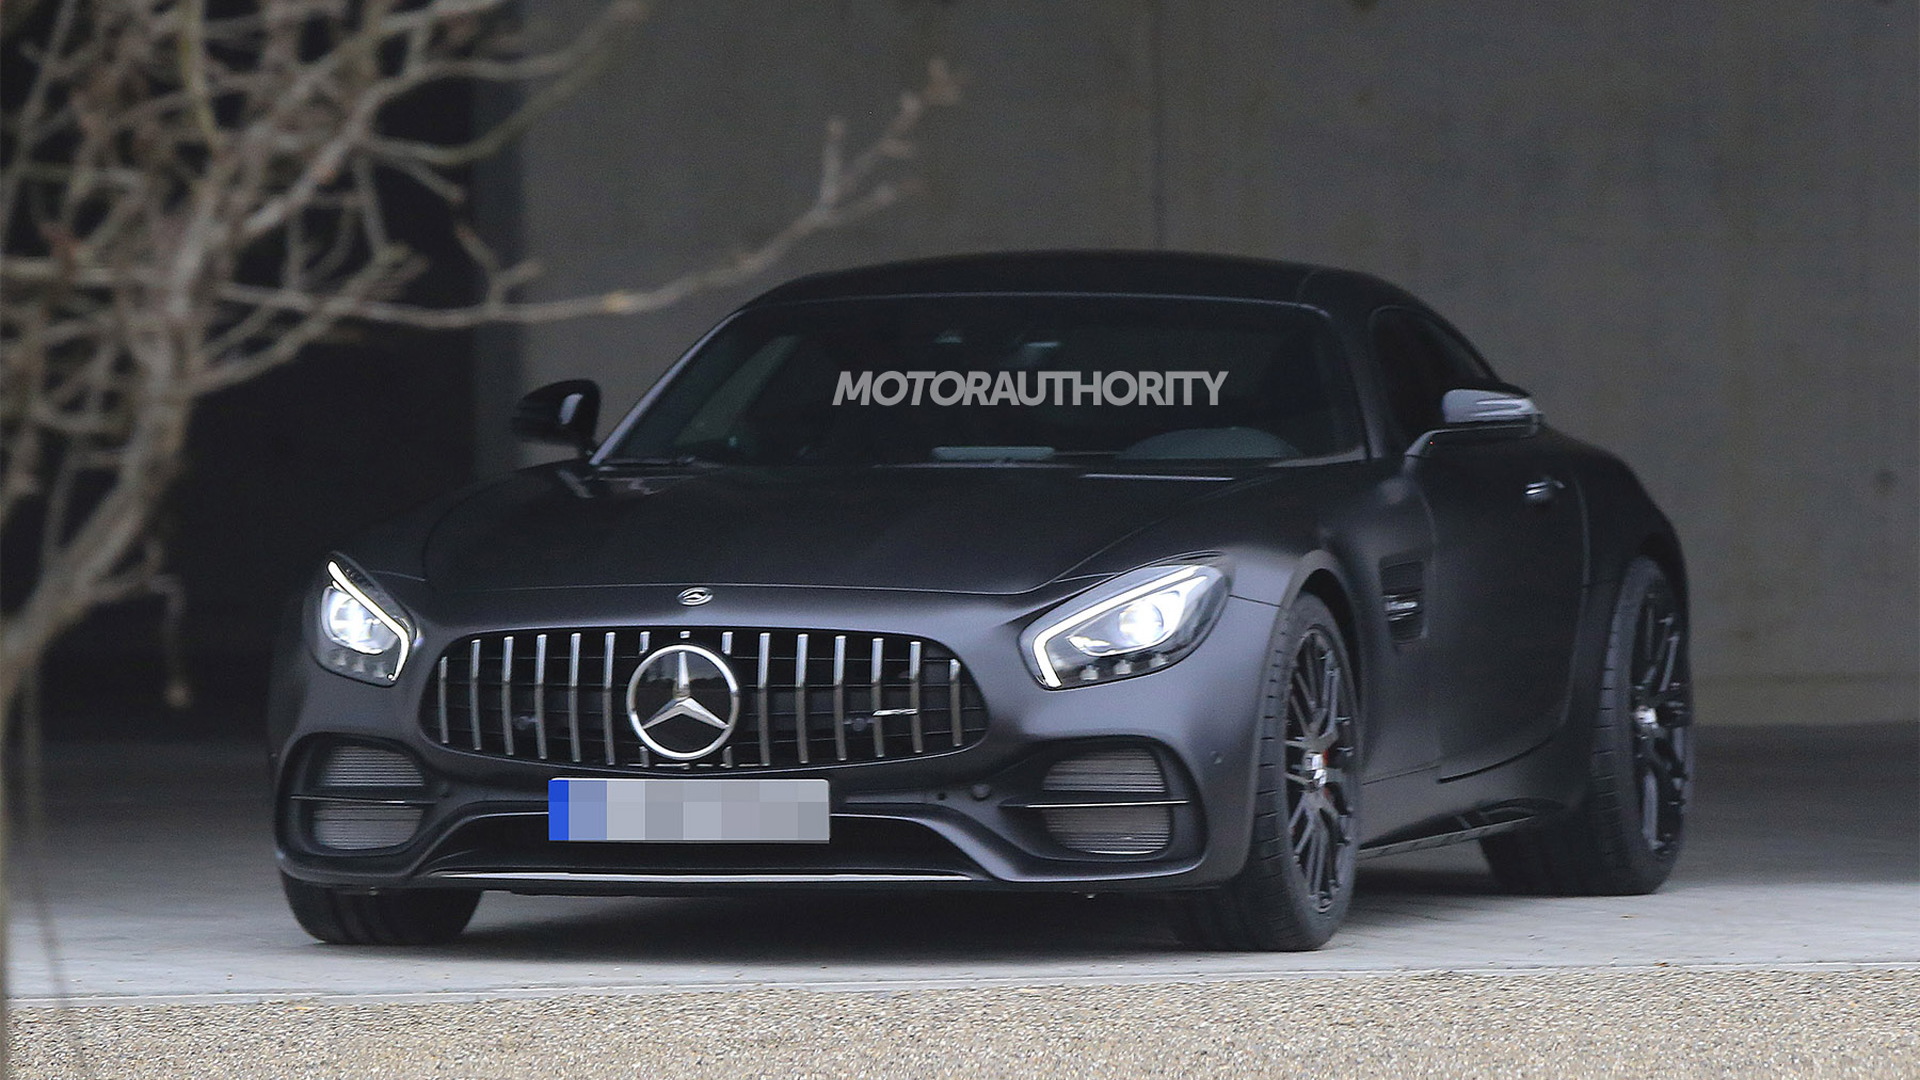 2018 Mercedes-AMG GT C spy shots - Image via S. Baldauf/SB-Medien